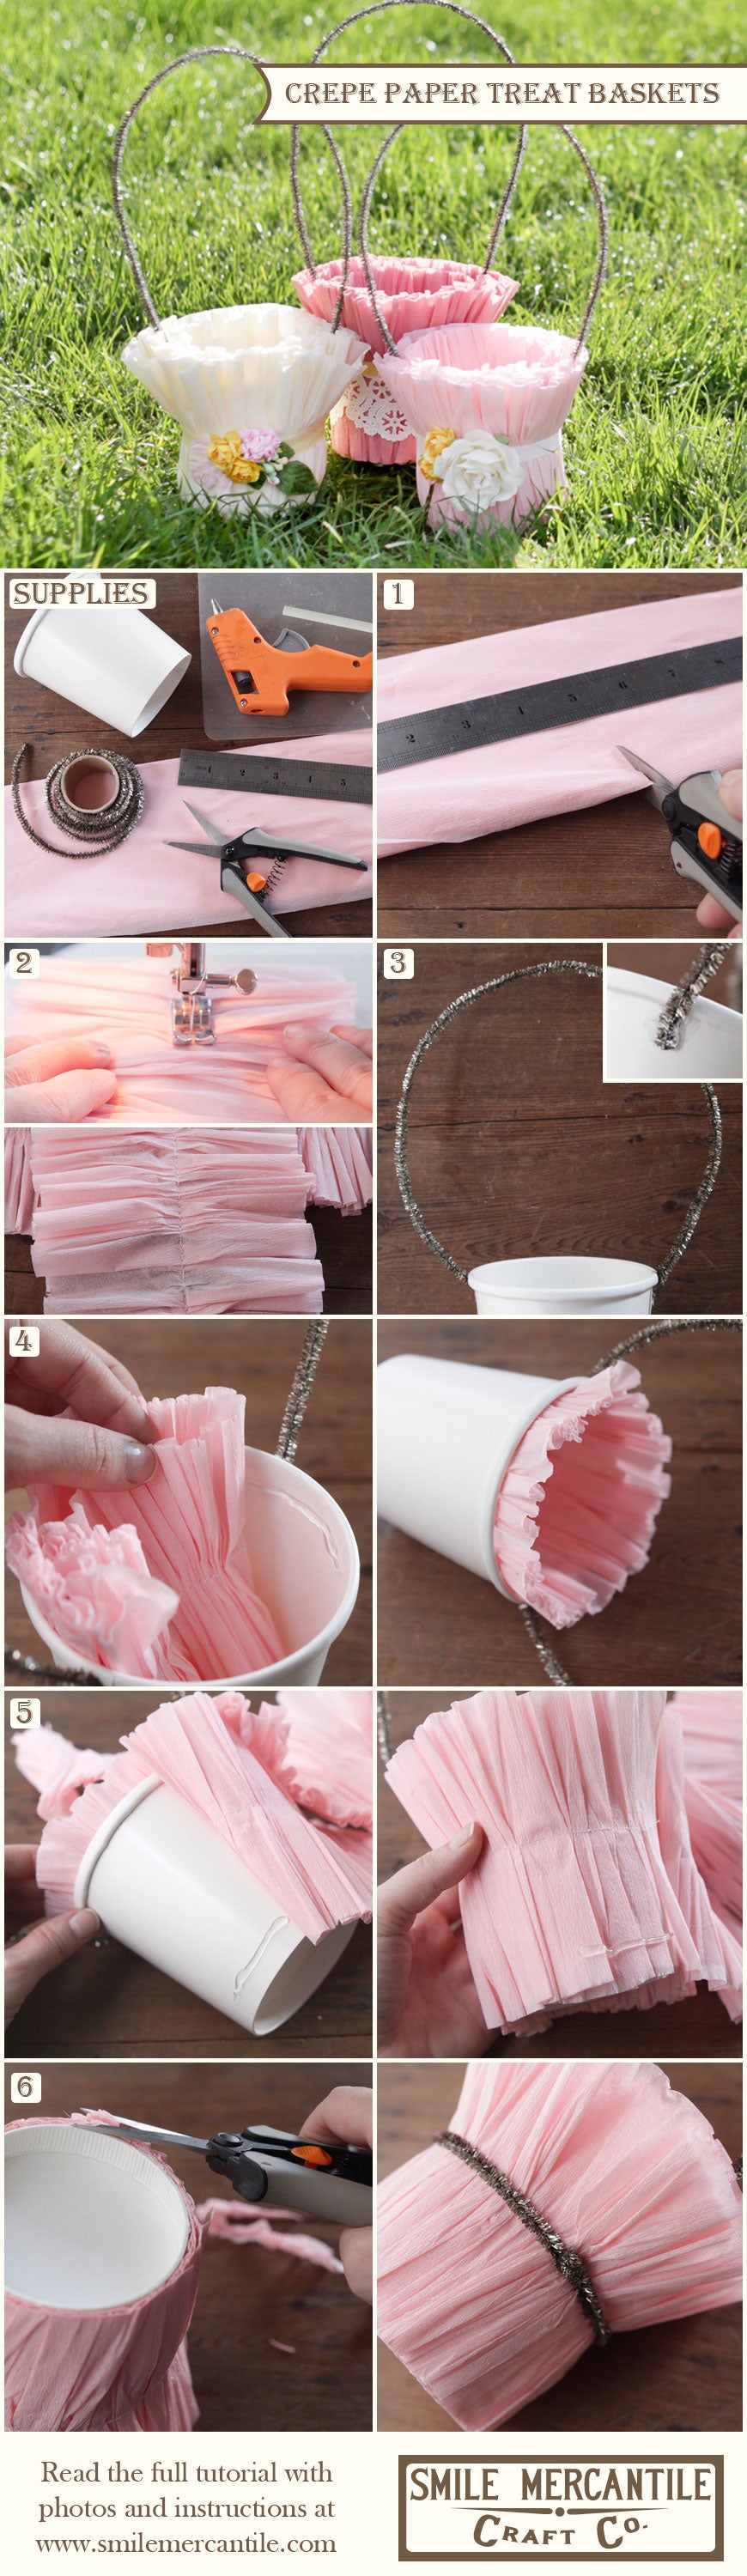 Tutorial: Crepe Paper Treat Baskets 